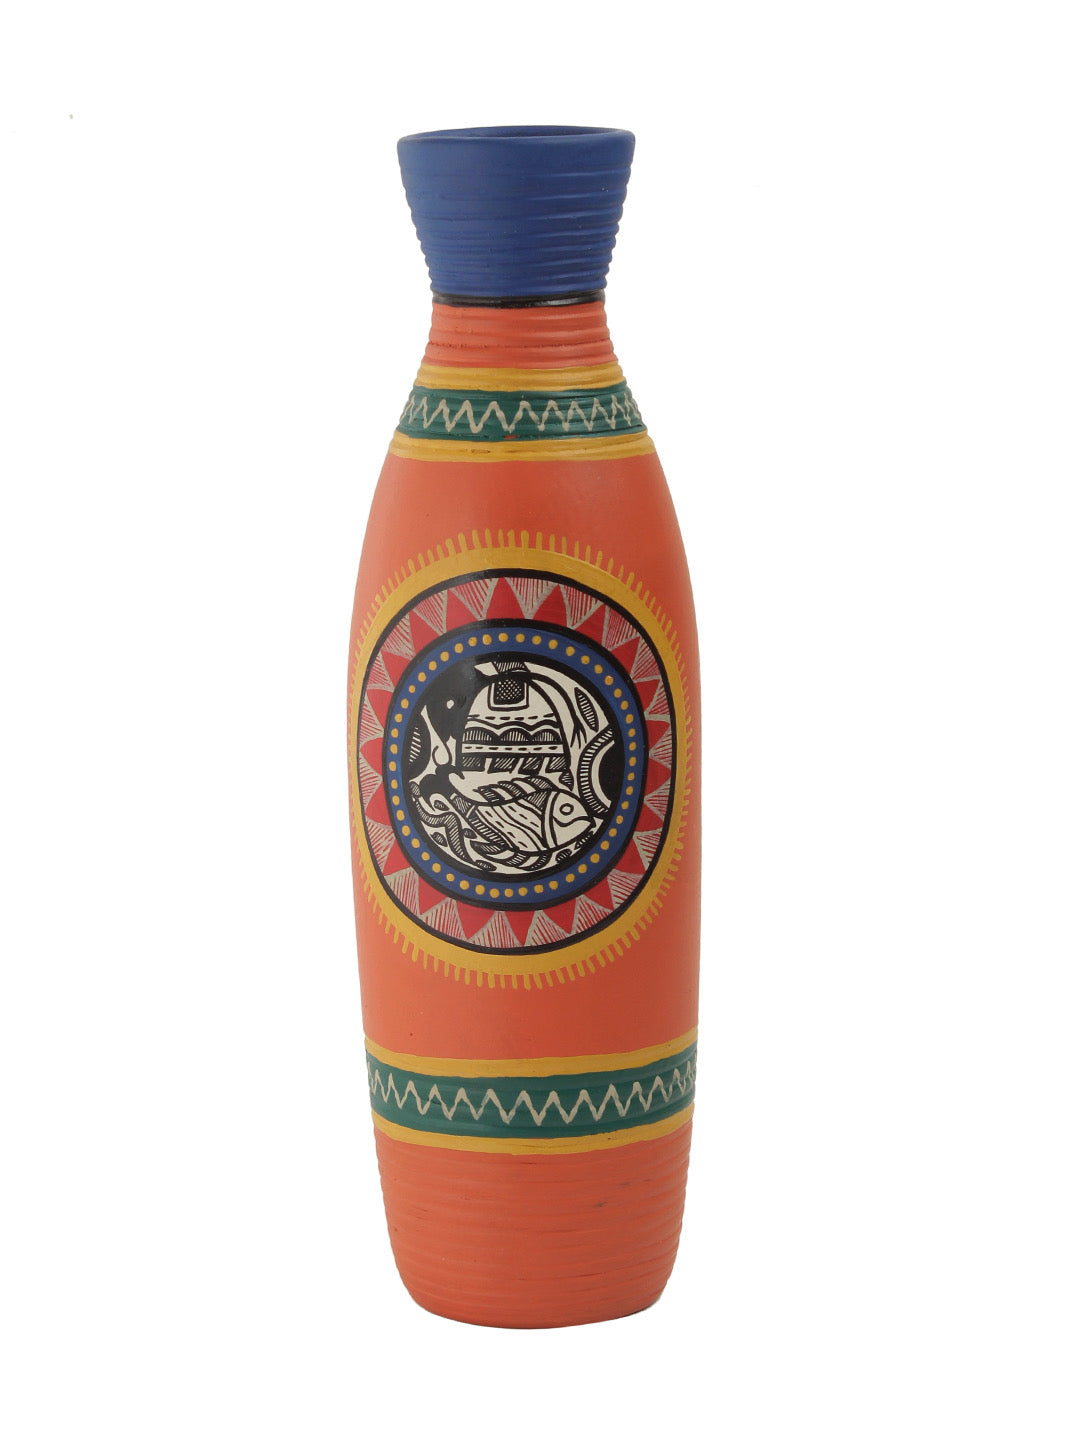 Orange Coloured Teracotta Vase - Default Title (VAS201407)